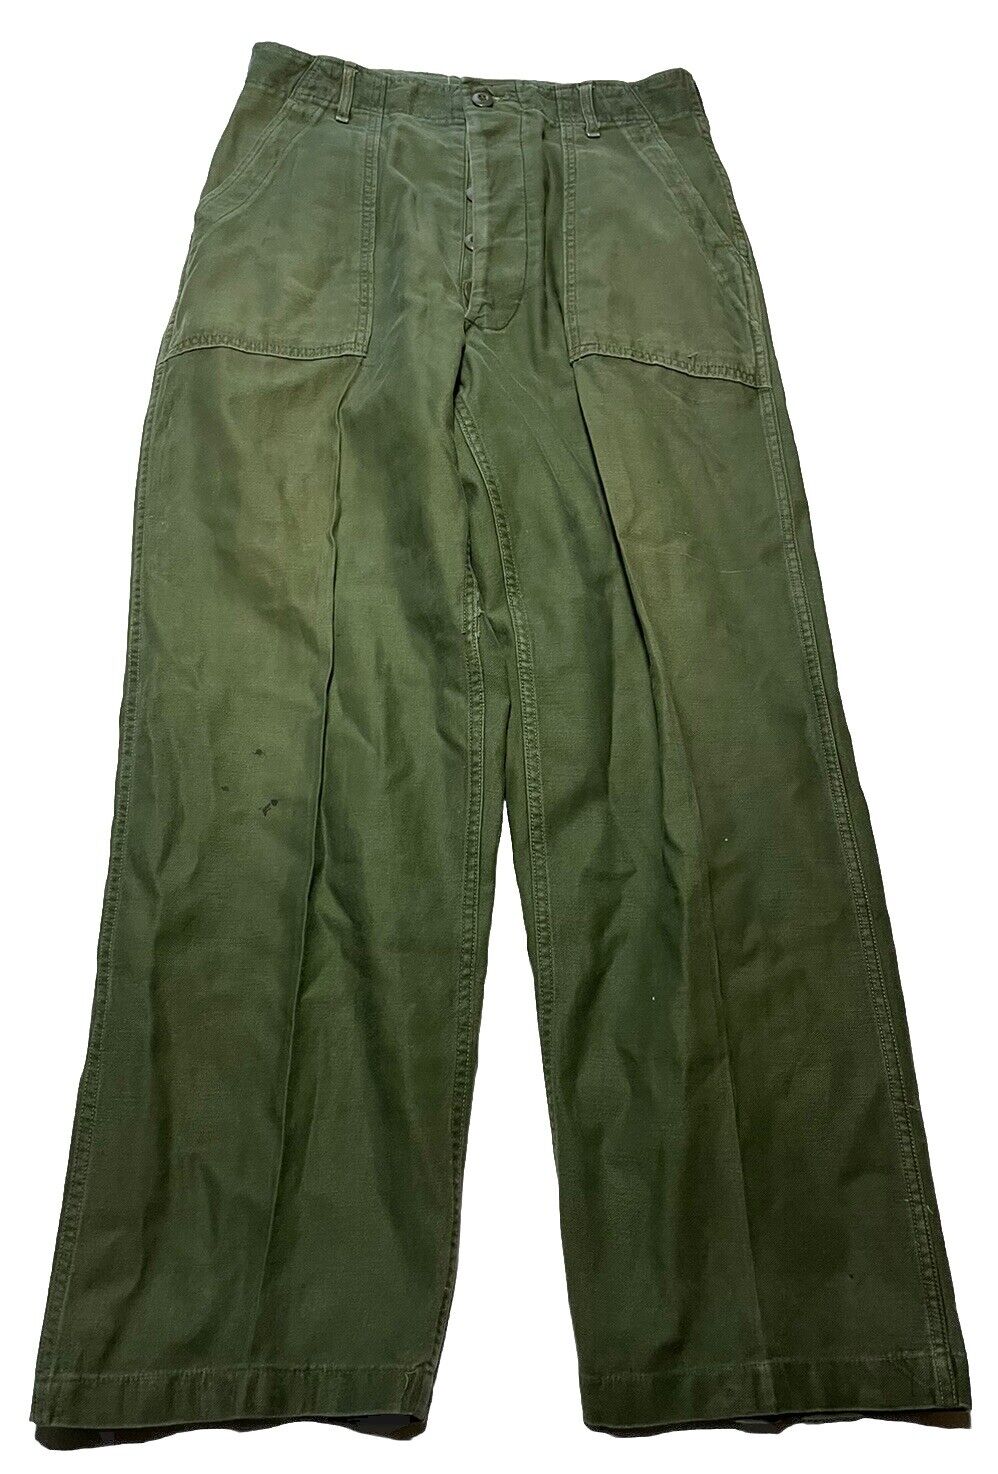 Vintage OG-107 Type 1 Vietnam US Military Pants 32x31 AO5